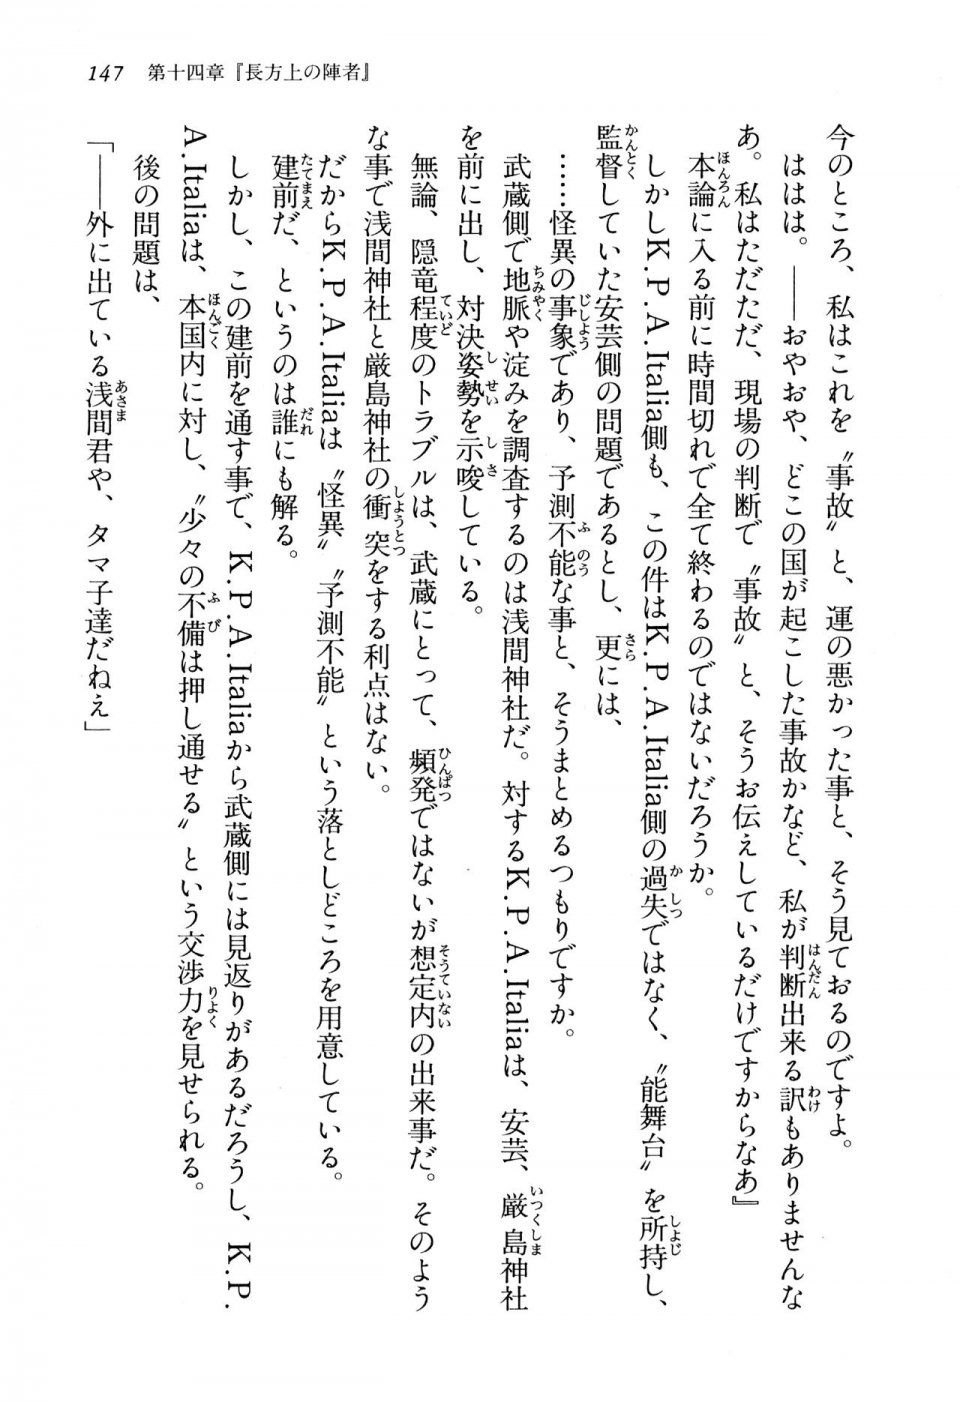 Kyoukai Senjou no Horizon BD Special Mininovel Vol 3(2A) - Photo #151